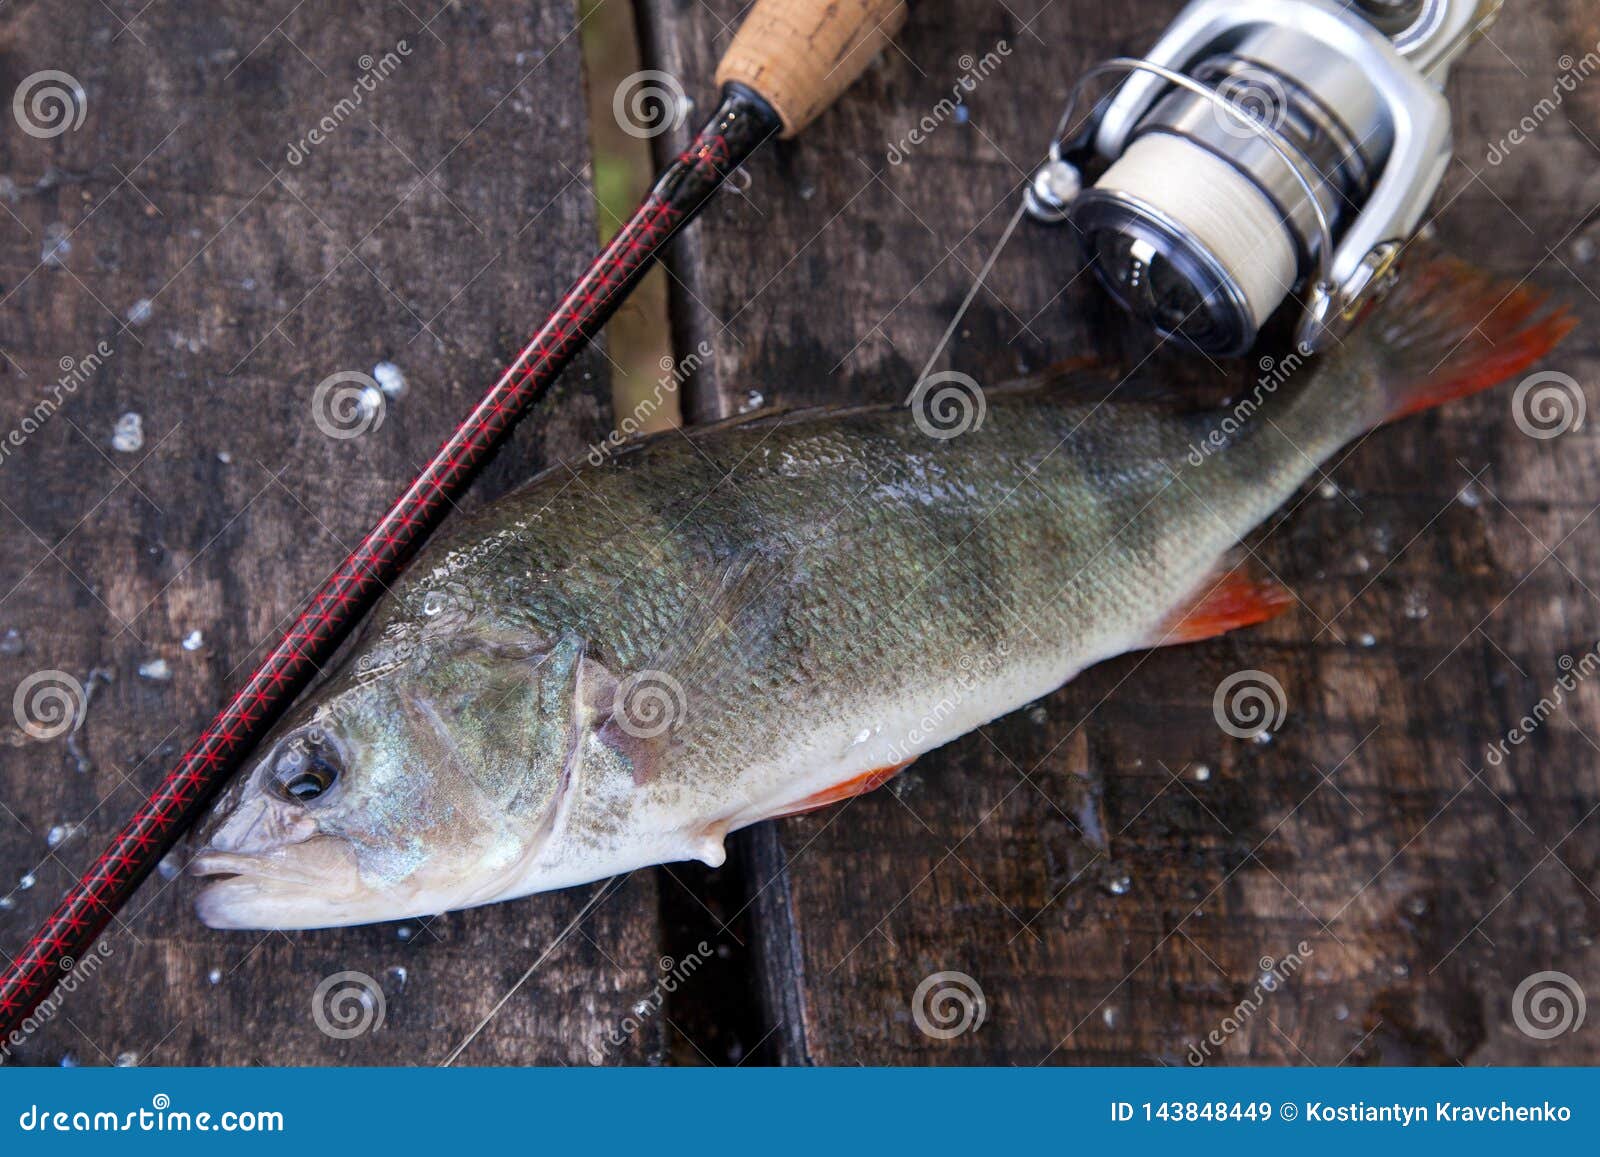 Trophy Fishing. Big Freshwater Perch and Fishing Equipment on